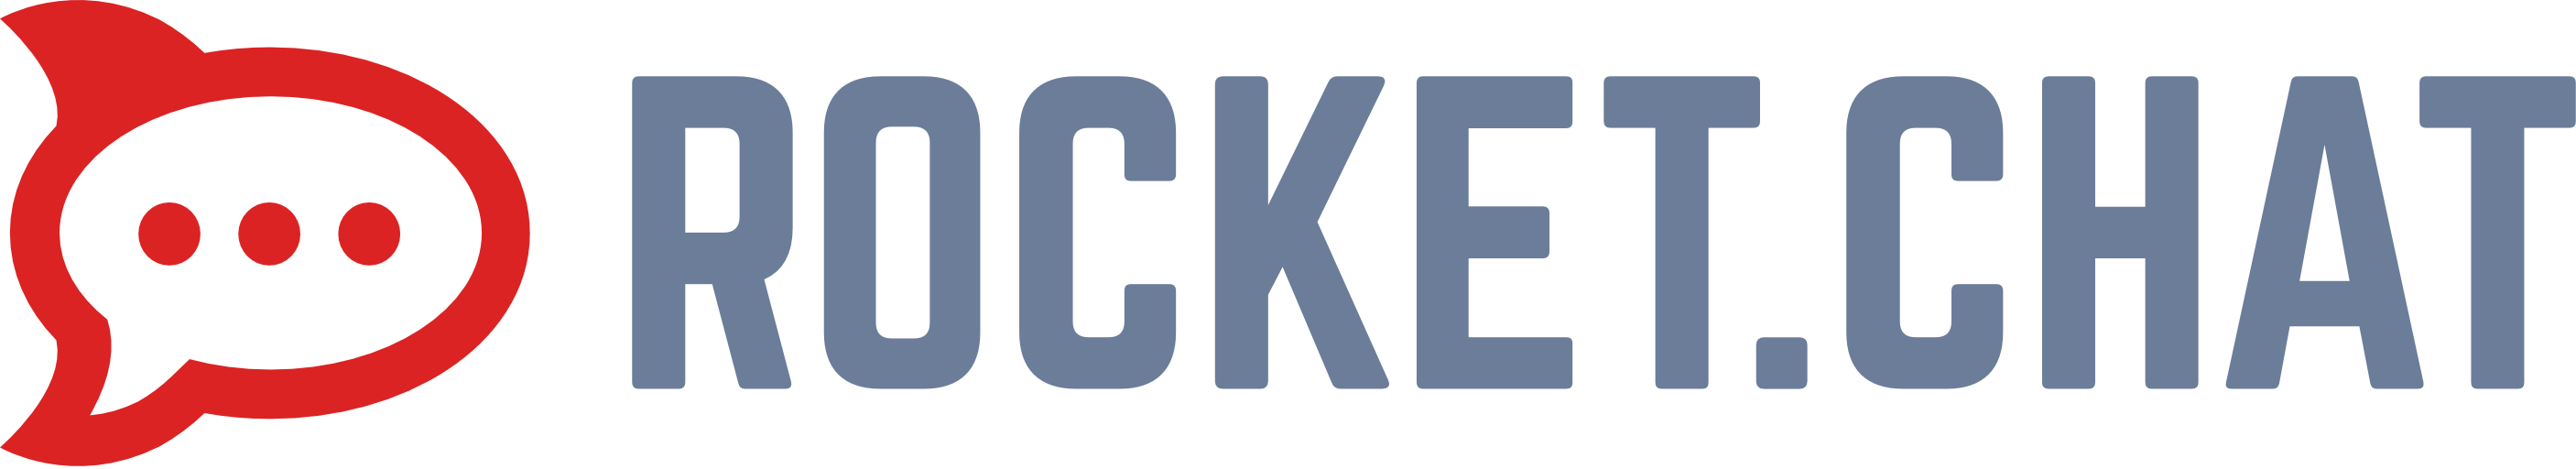 rocketchat forum